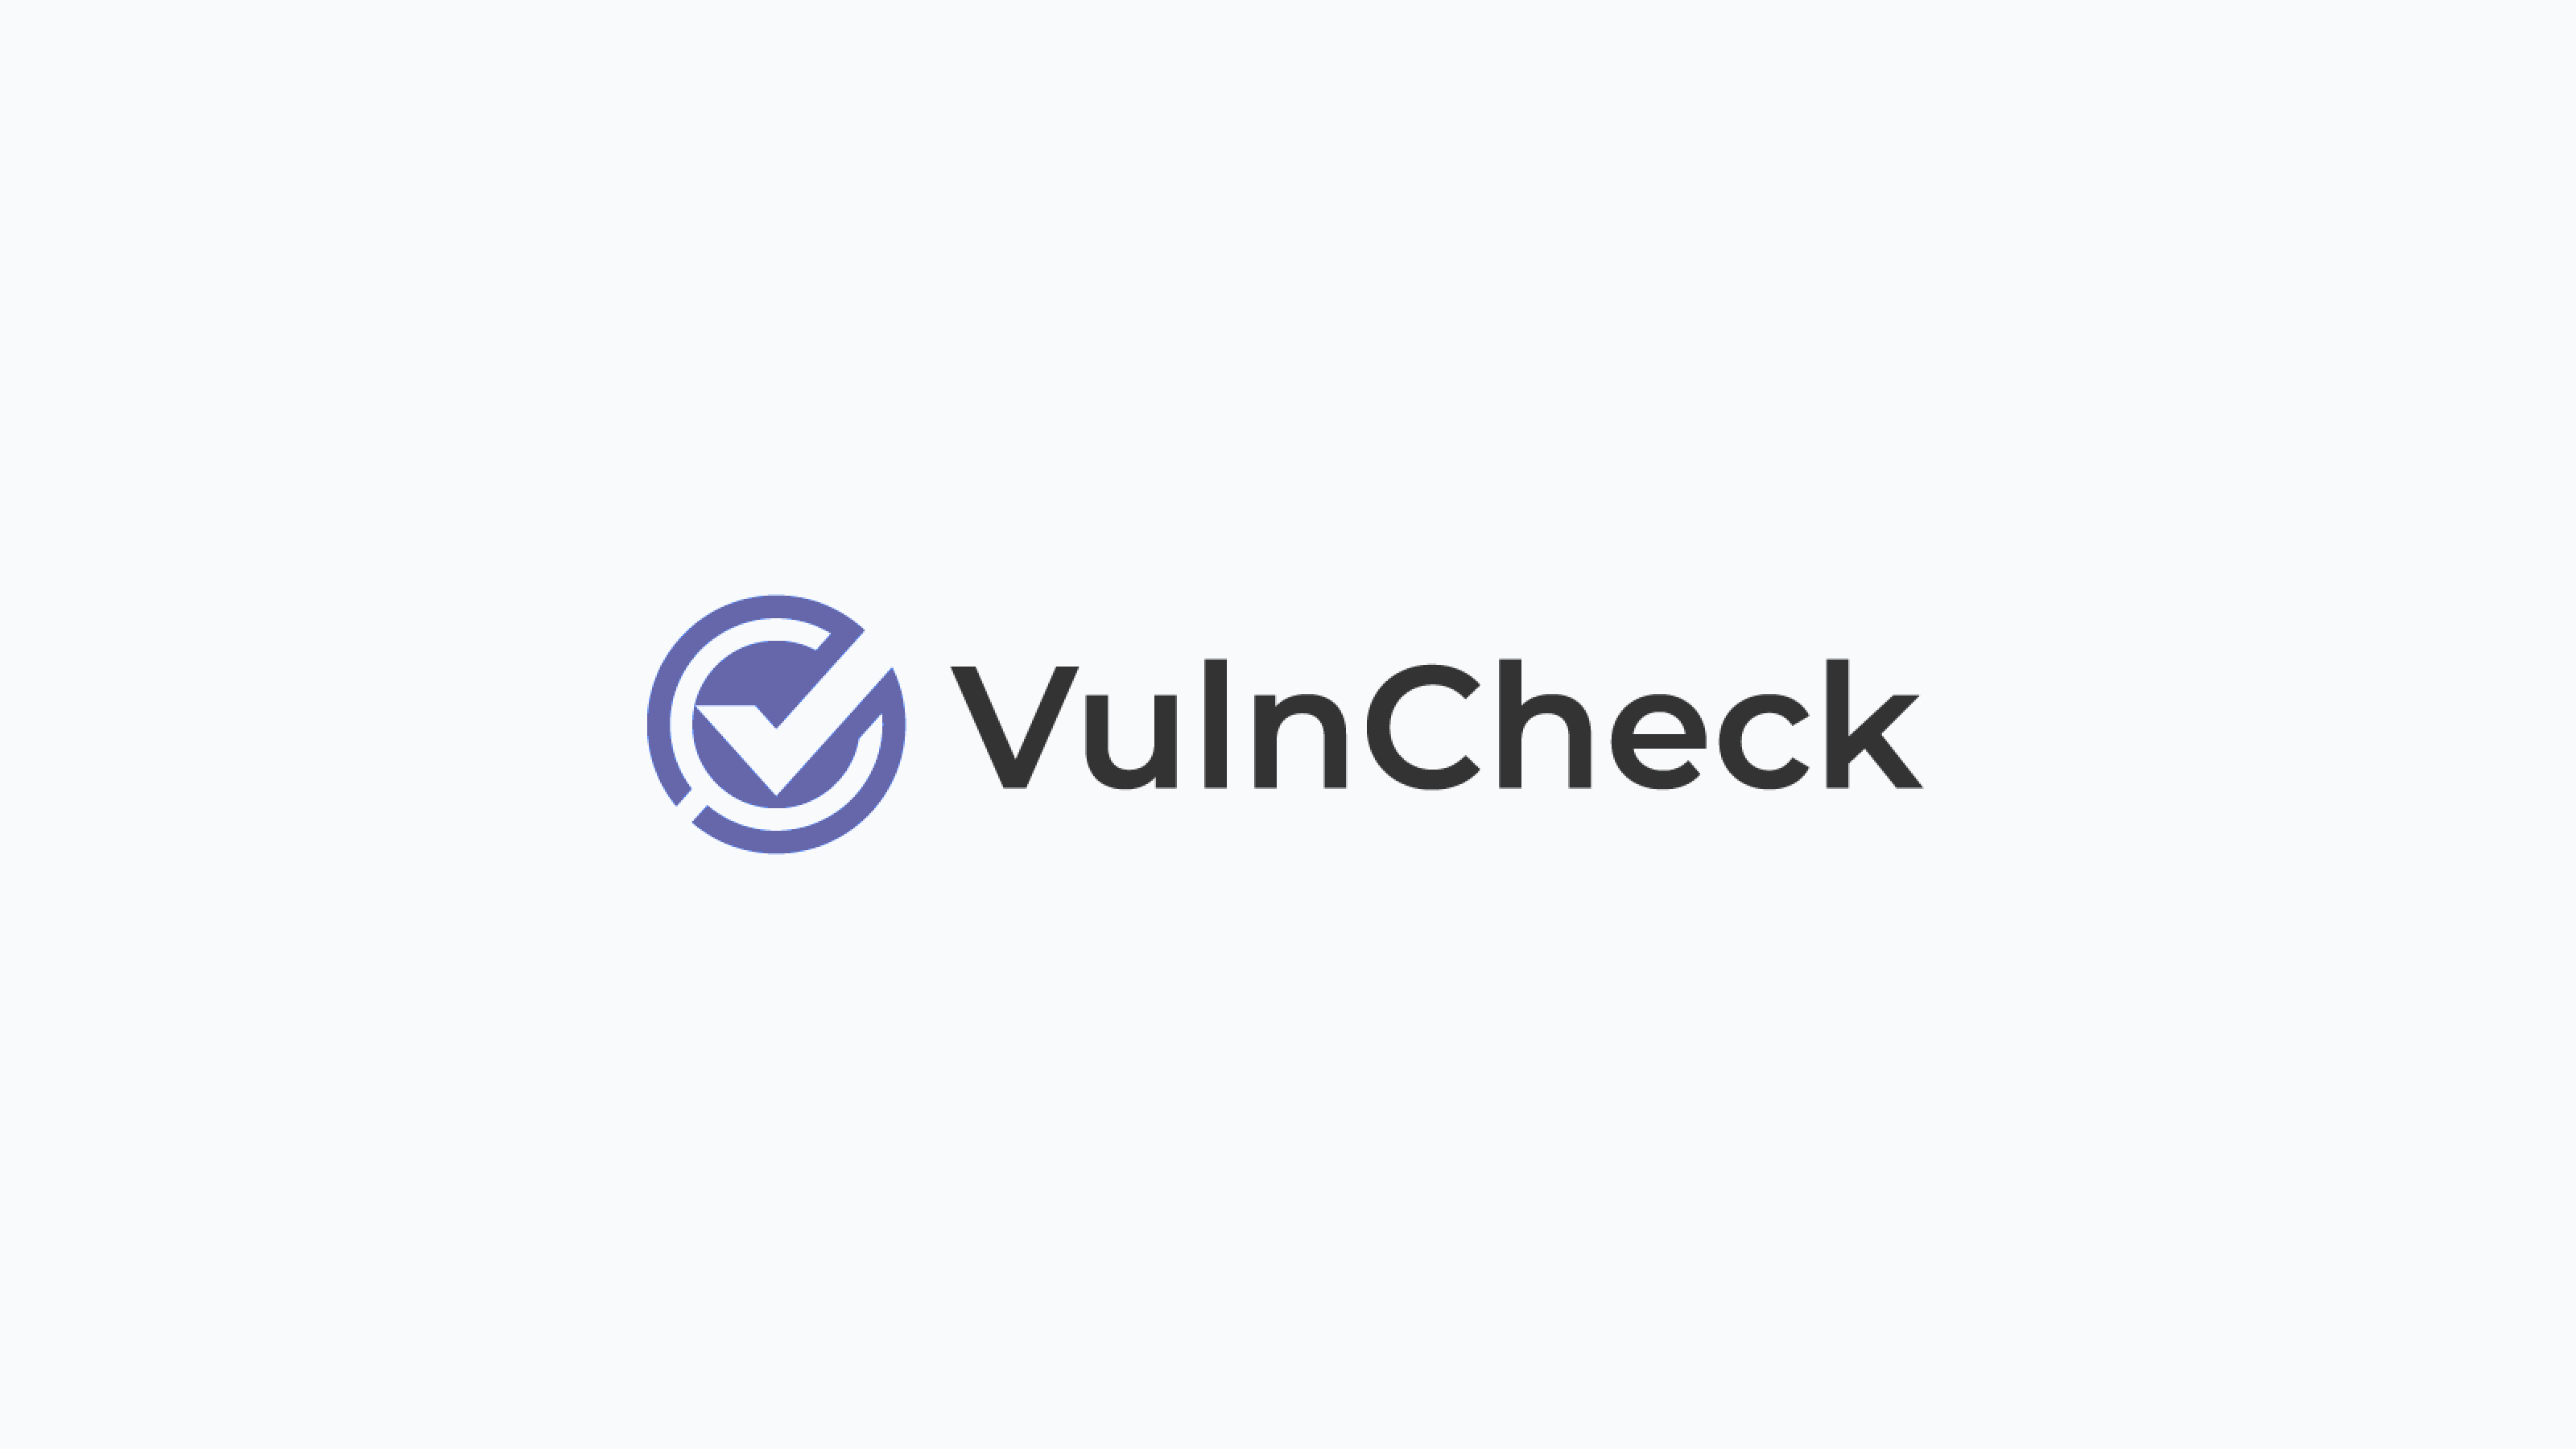 Enhancing Fleet's vulnerability management with VulnCheck integration